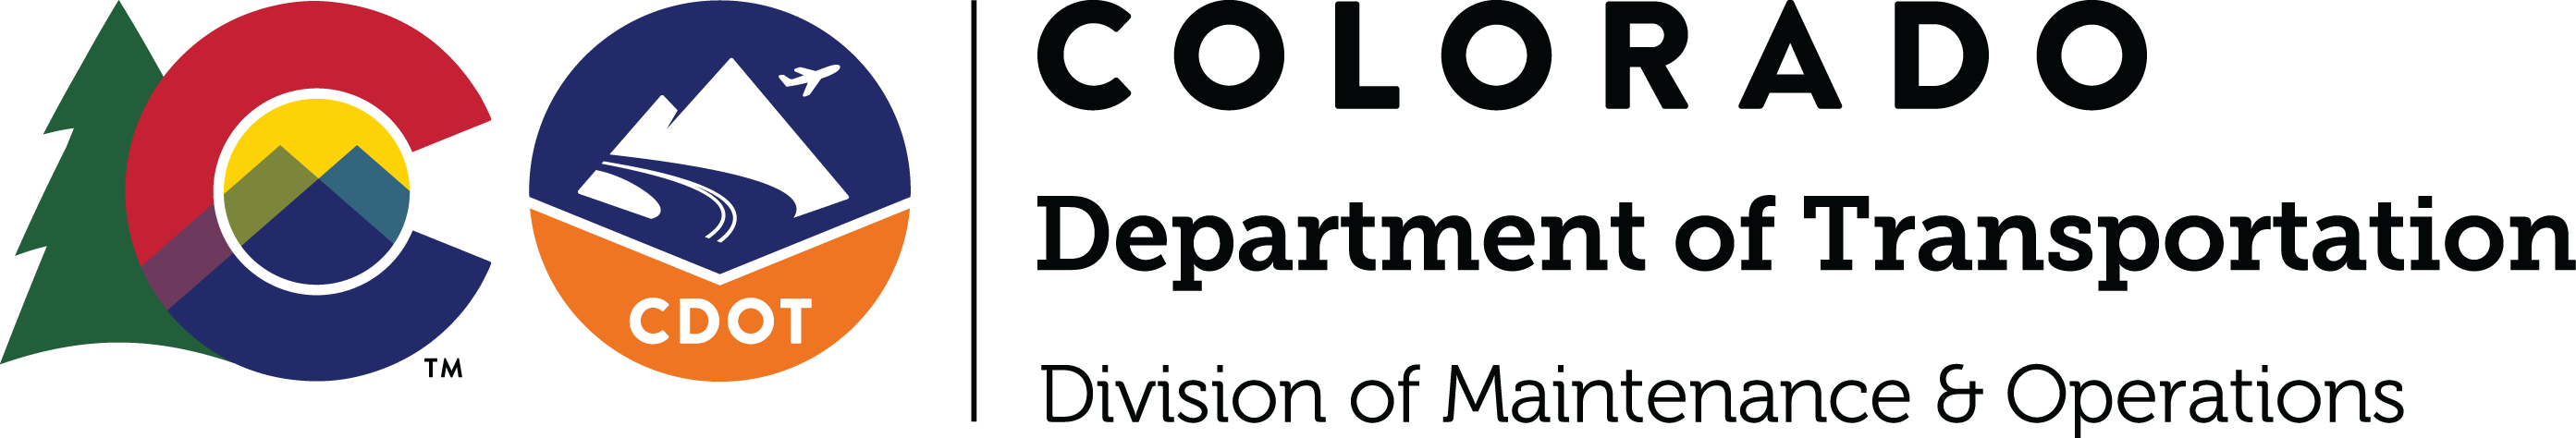 CDOT Division of Maintenance and Operations logo.png detail image